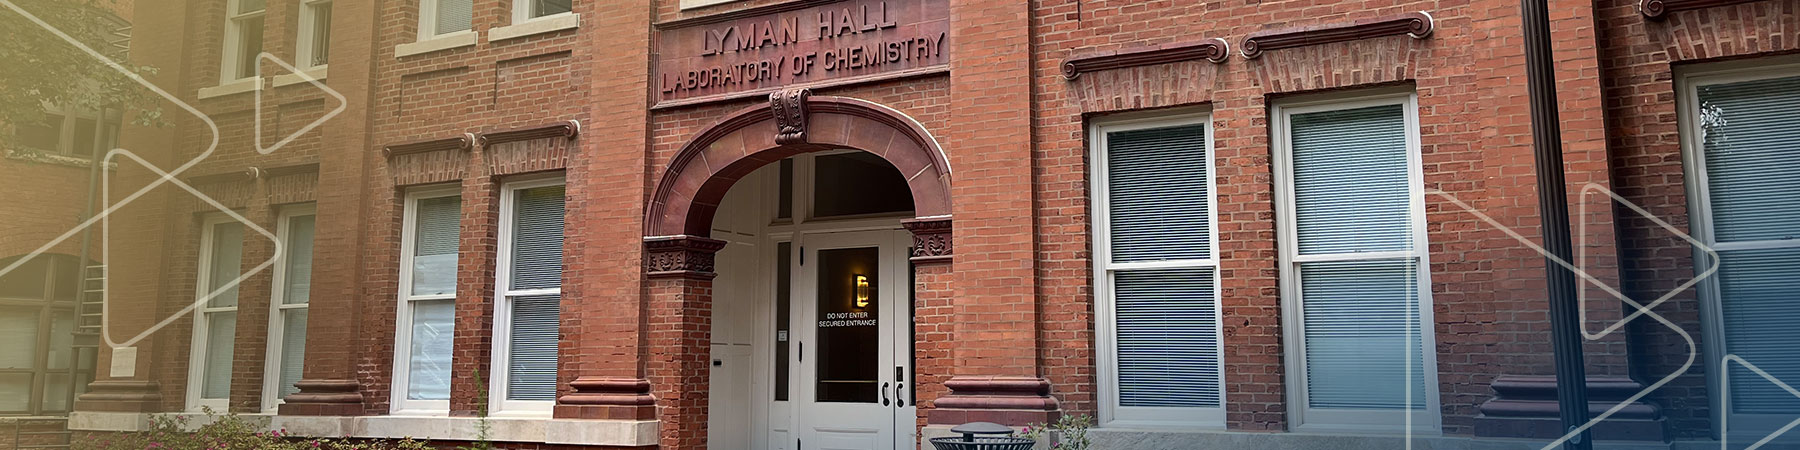 The exterior entrance of Lyman Hall on Georgia Tech's Campus